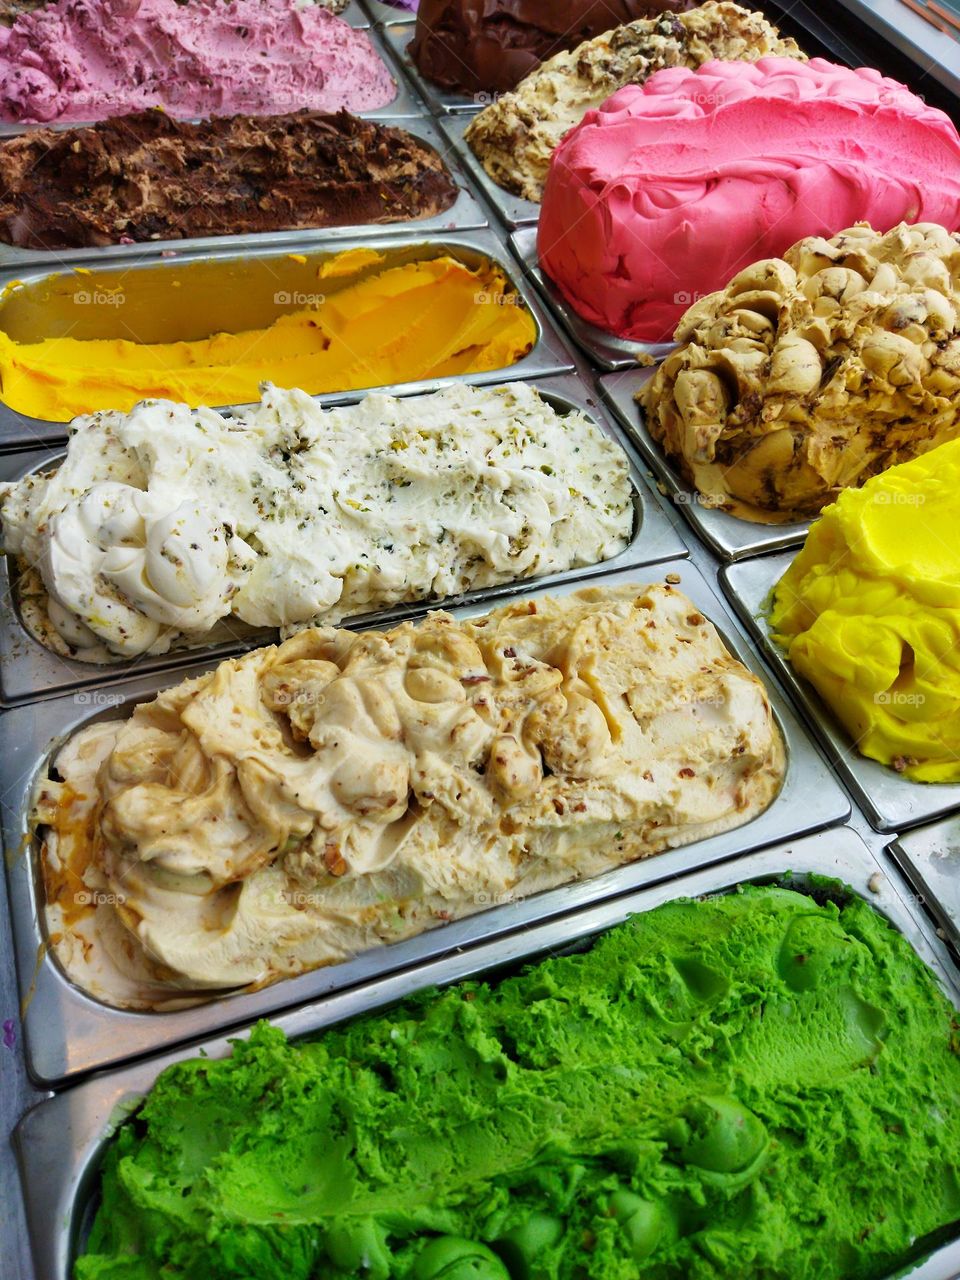 Ice cream in different flavors